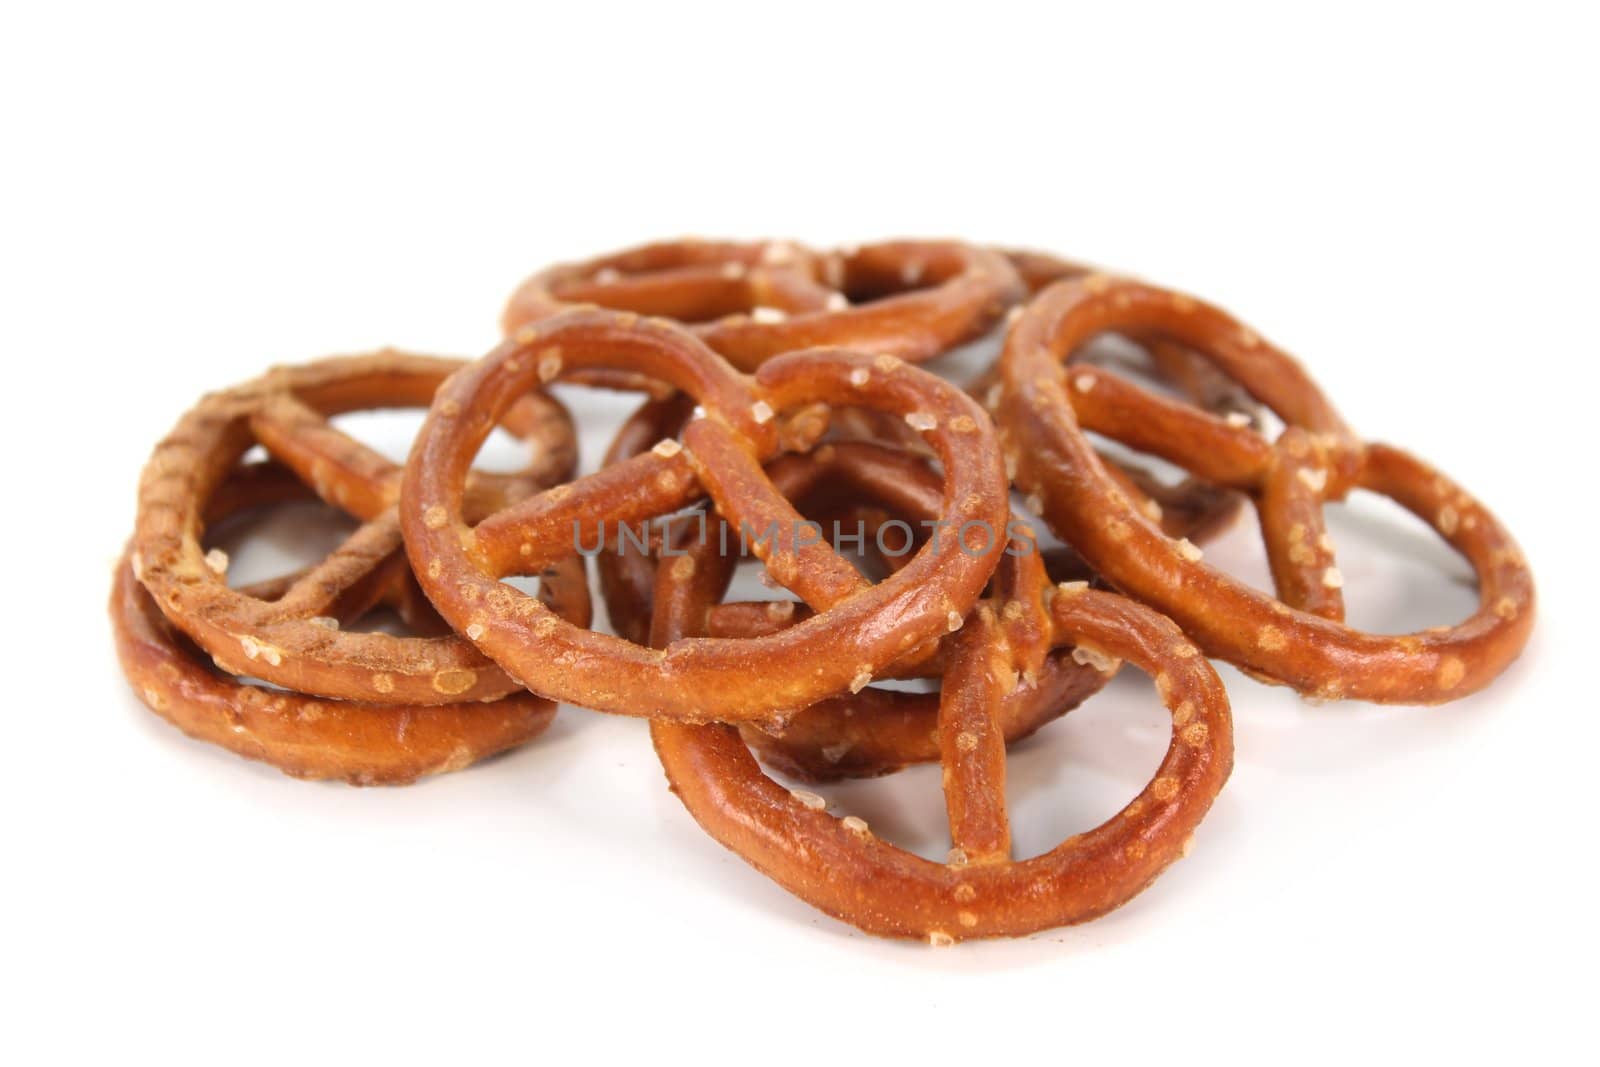 a handful of salt pretzels on a white background
